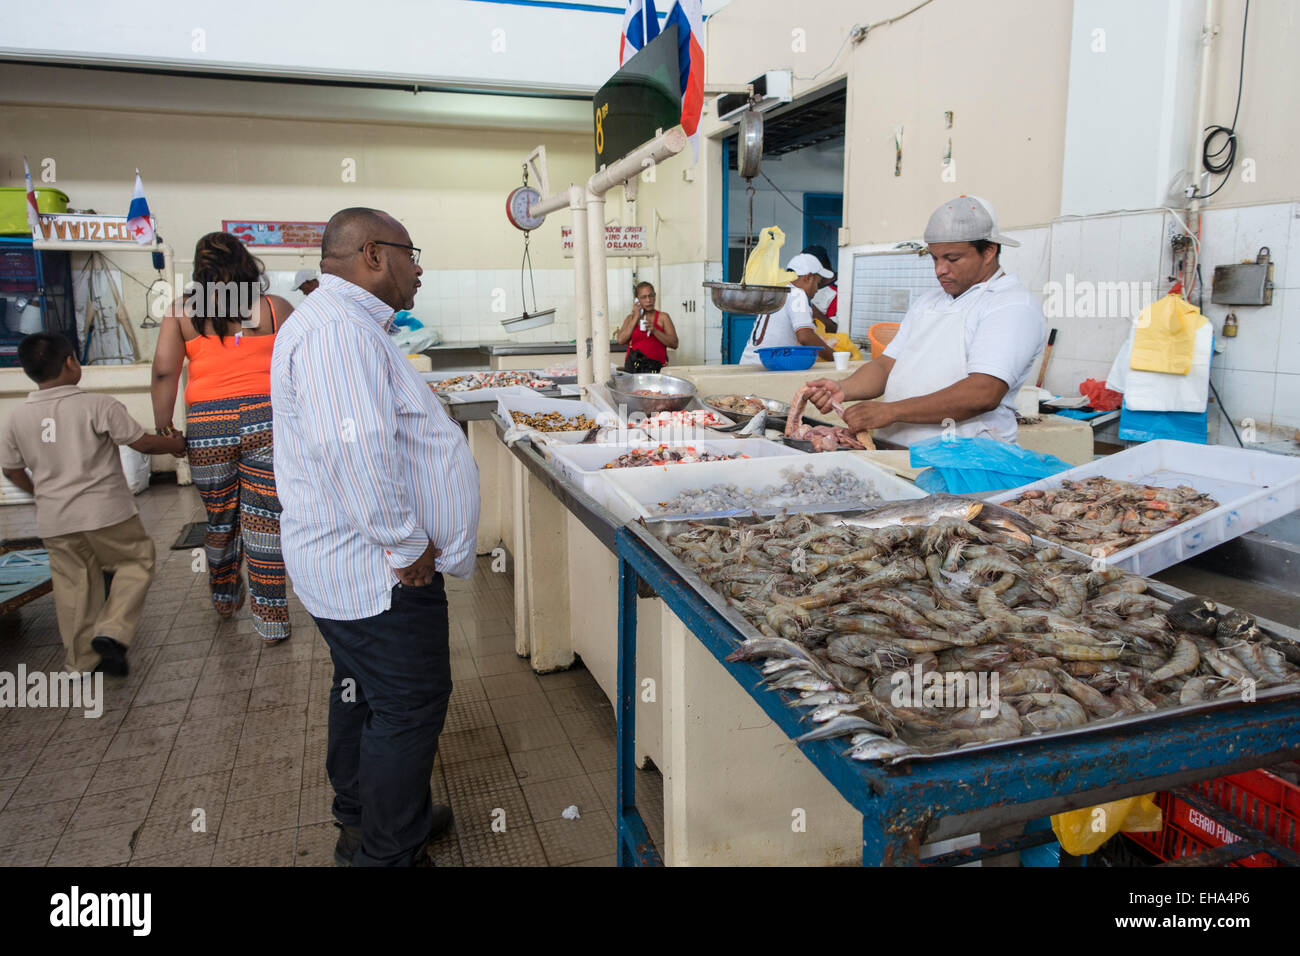 Seafood market in Panama City Panama Stock Photo